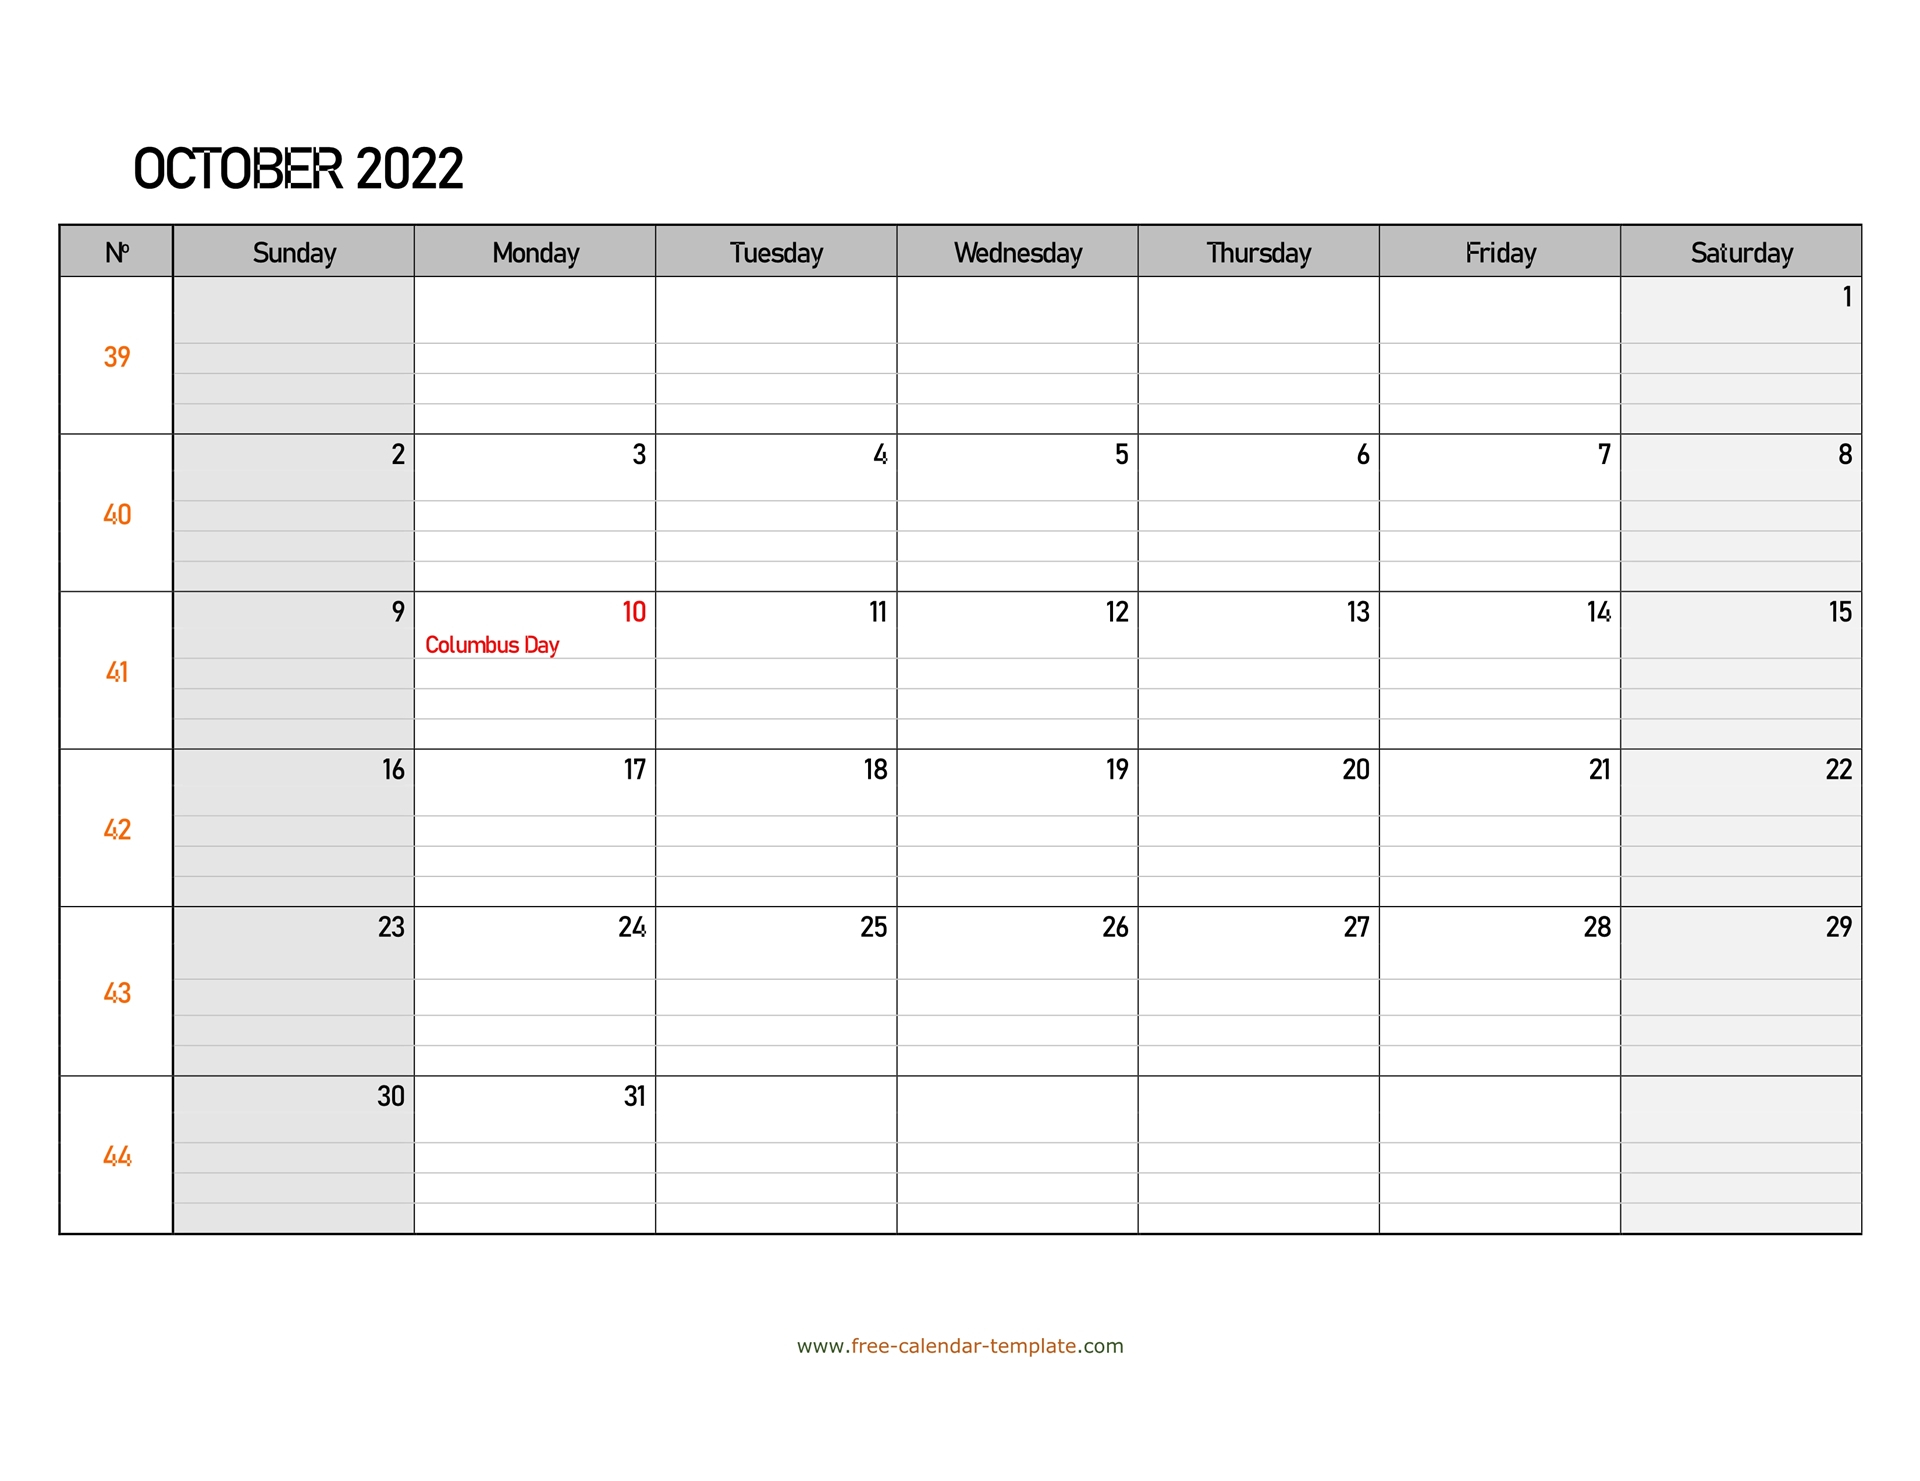 October 2022 Free Calendar Tempplate | Free-Calendar-Template